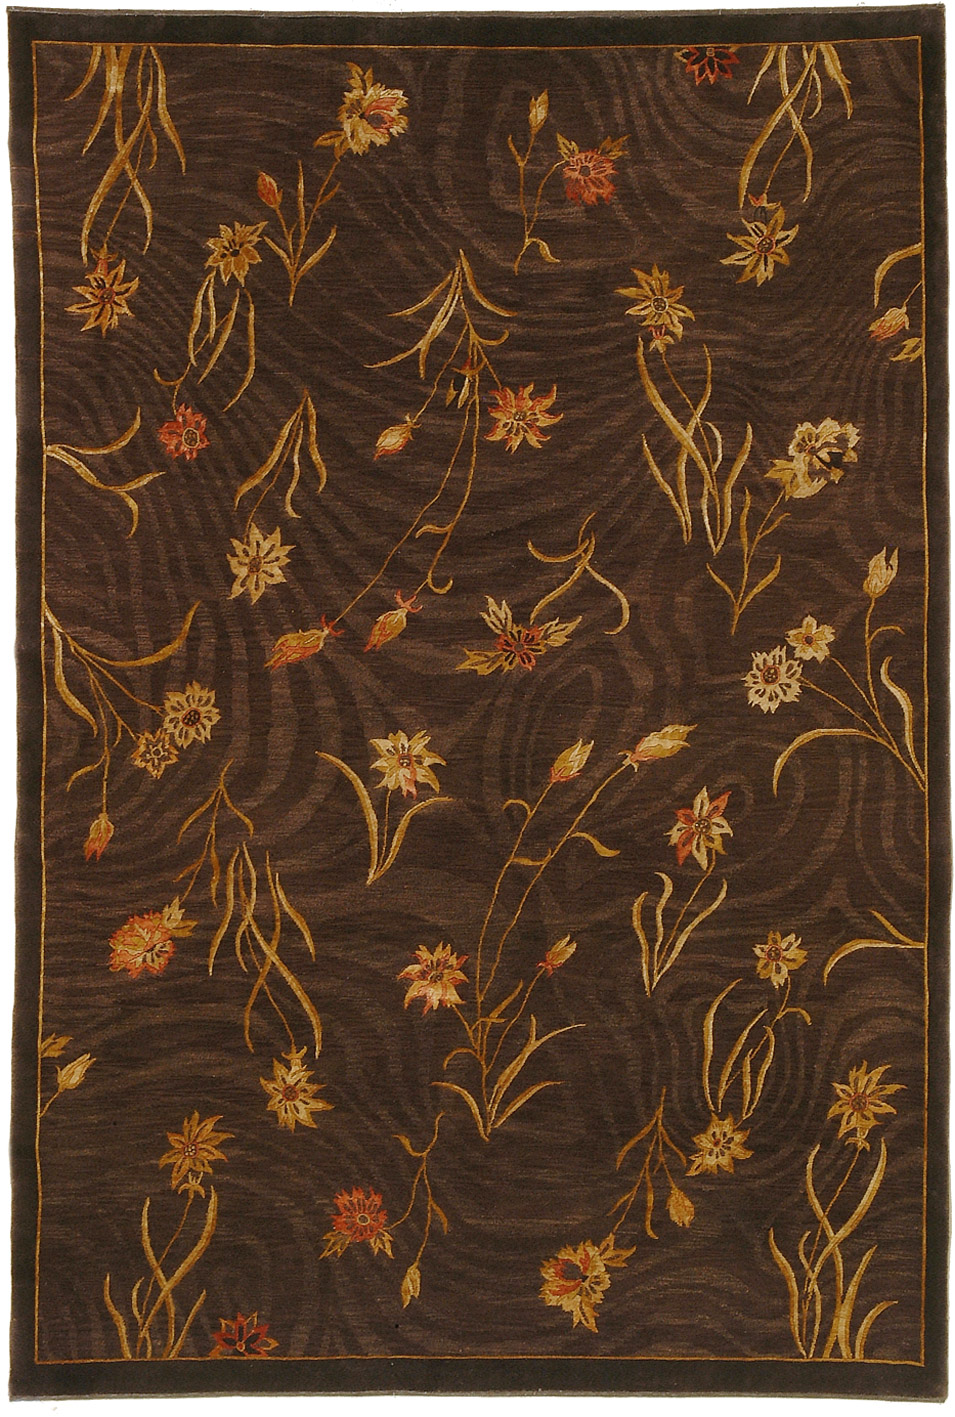  Name: 'Garden FLowers'  Collection: Neo Nepal
 NN015BNBN / Brown/Brown / 100% Wool 